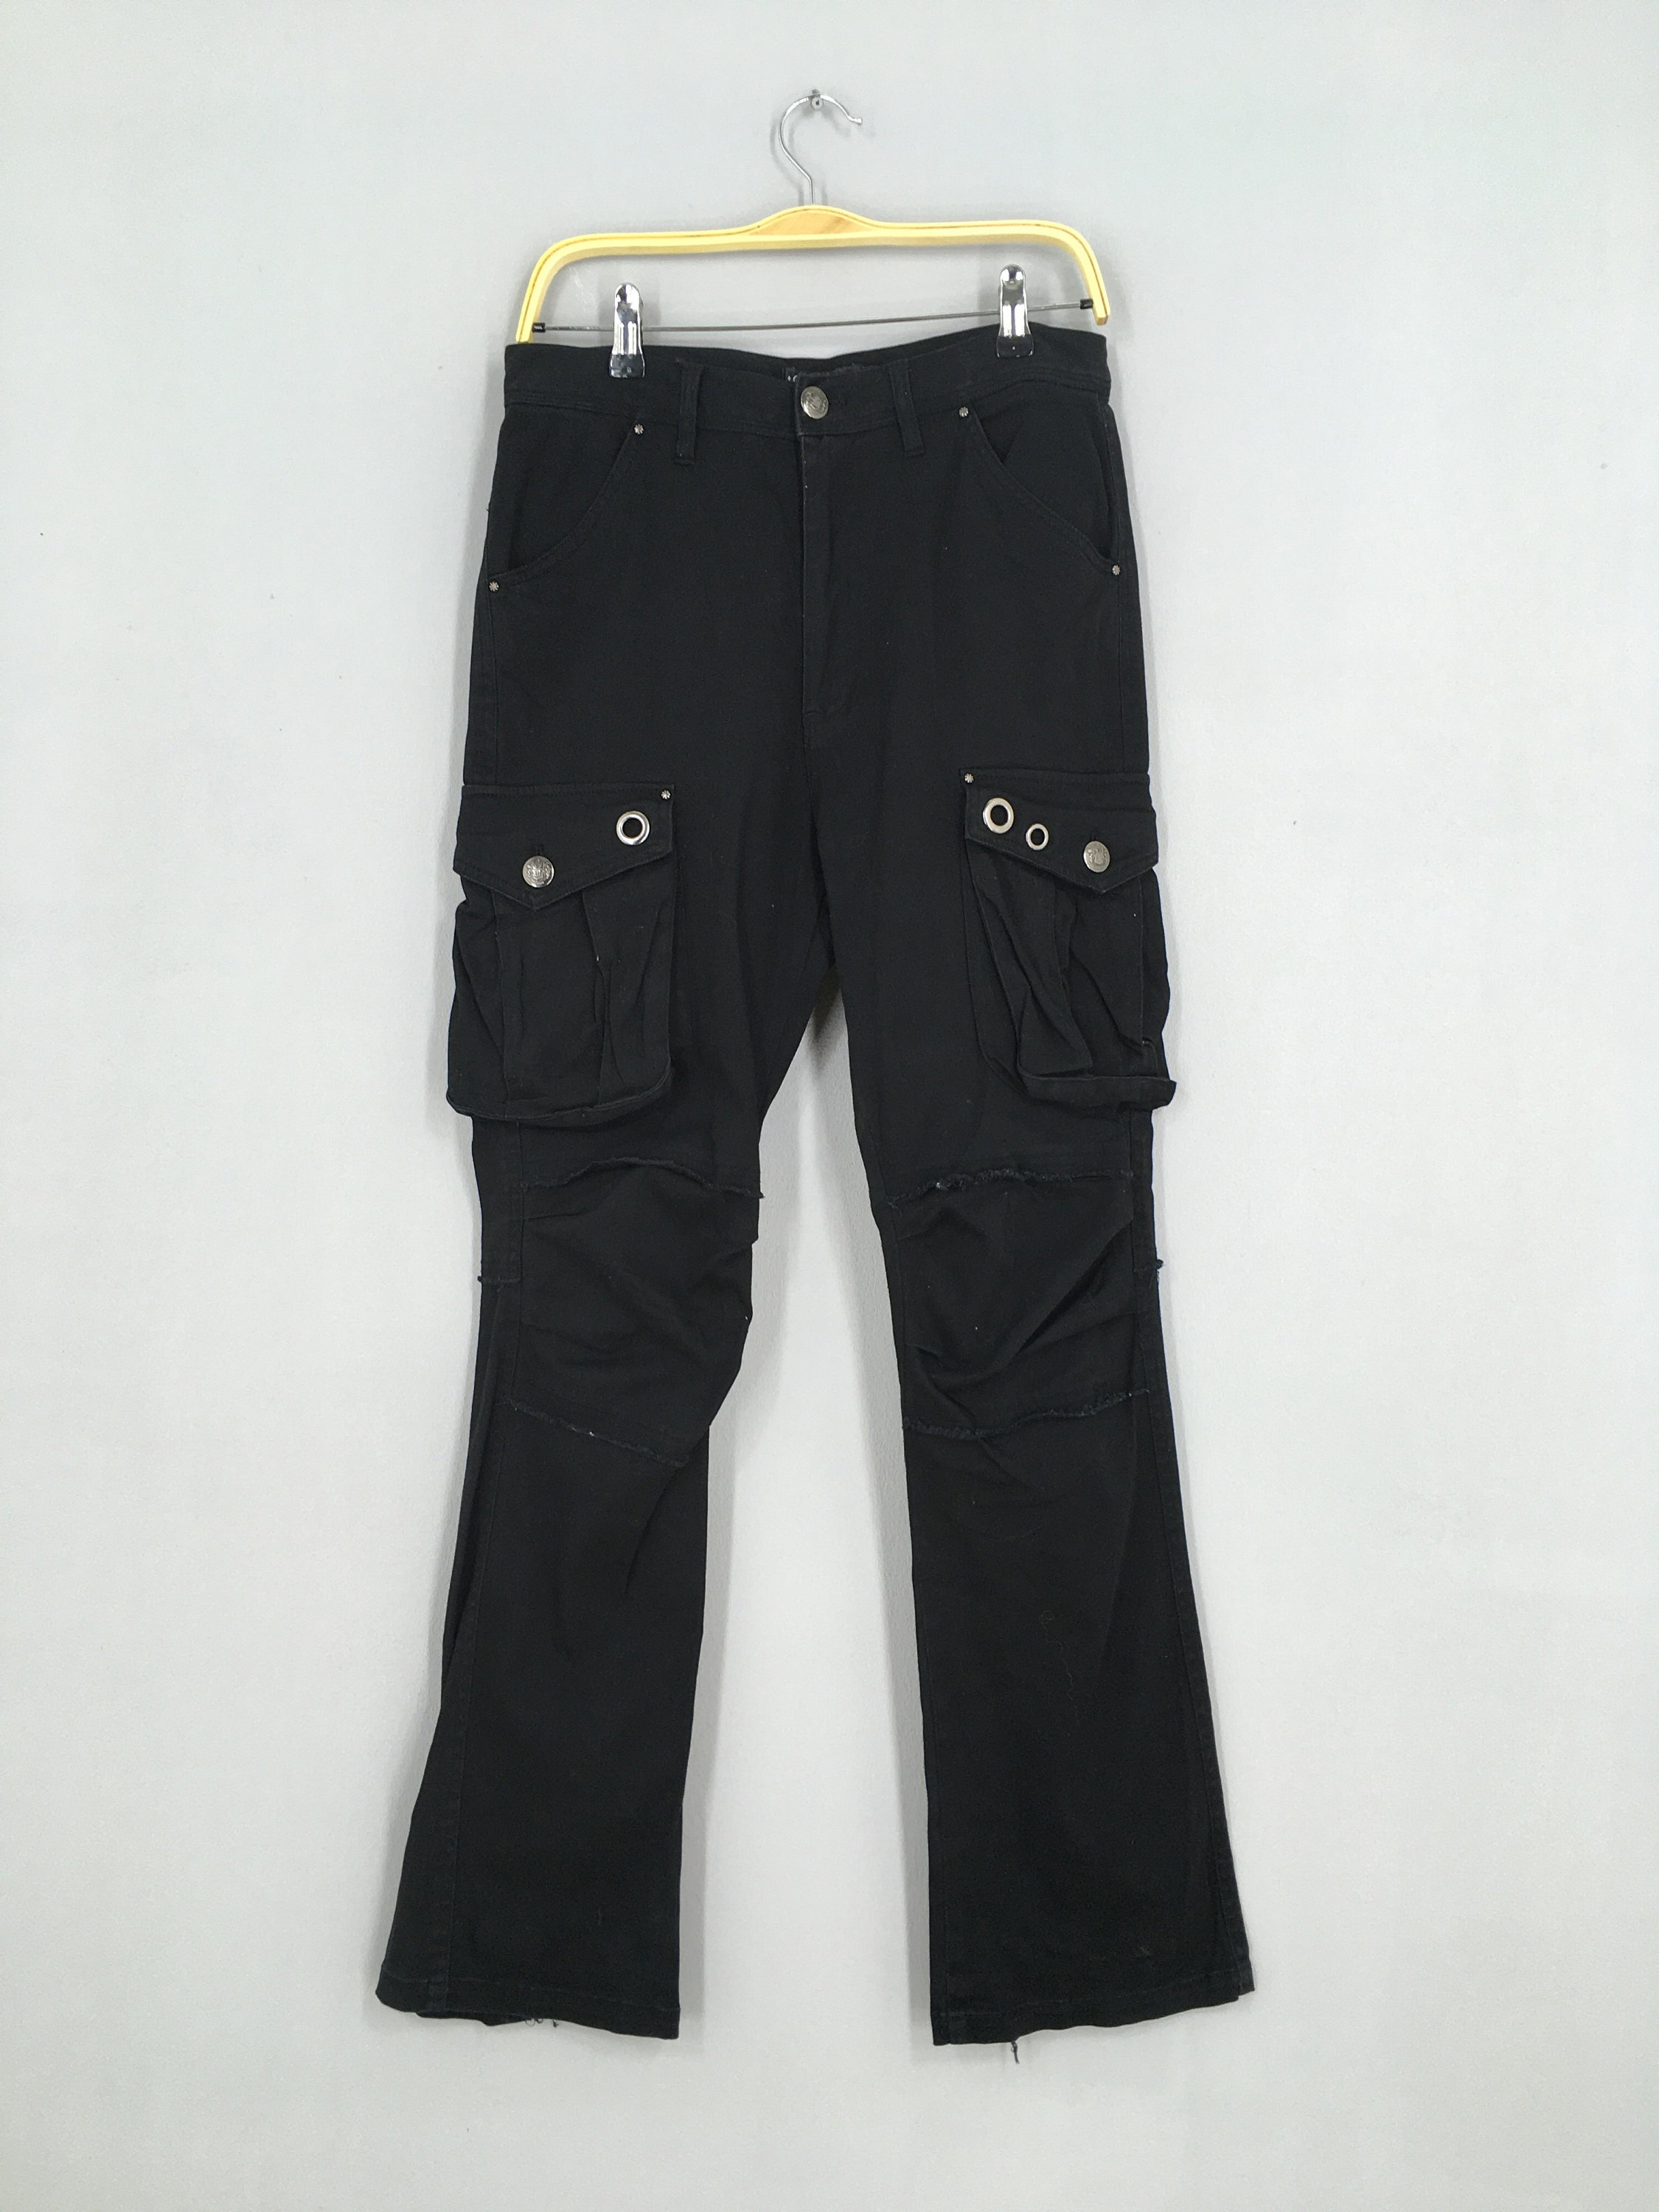 Size 30x29.5 Japanese Brand Black Cargo Pants Patterned Pants